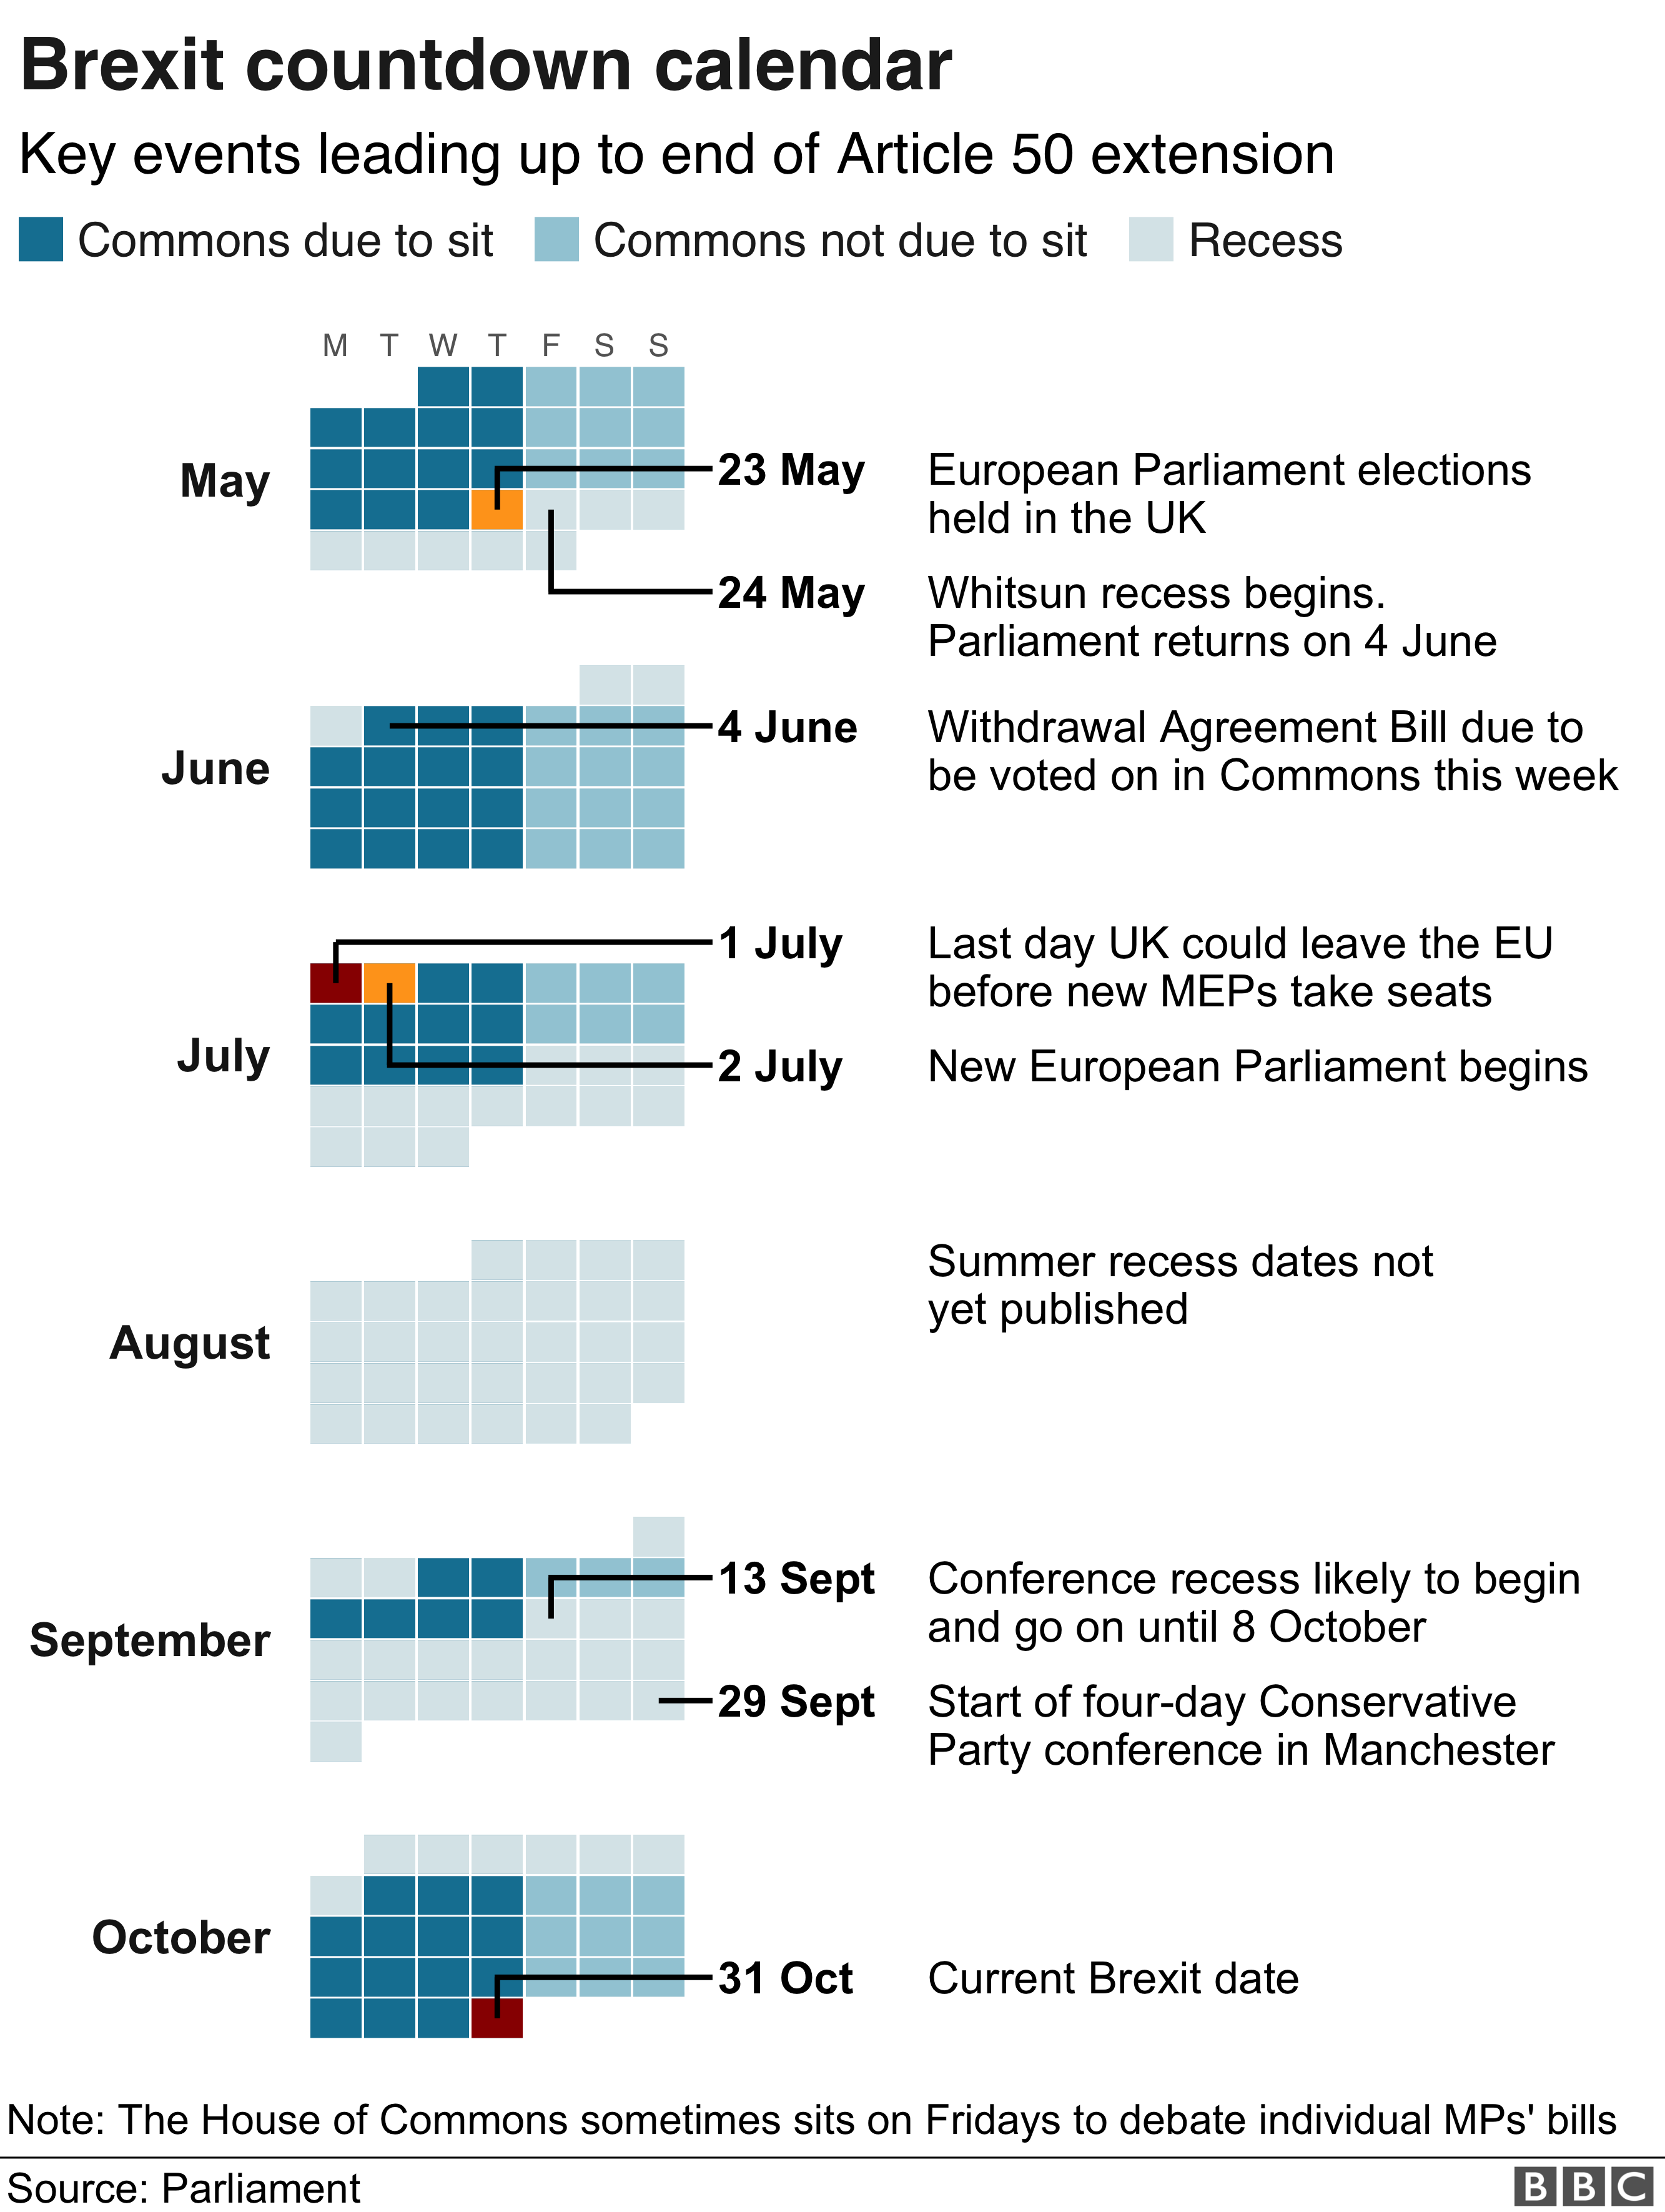 Календарь обратного отсчета Brexit